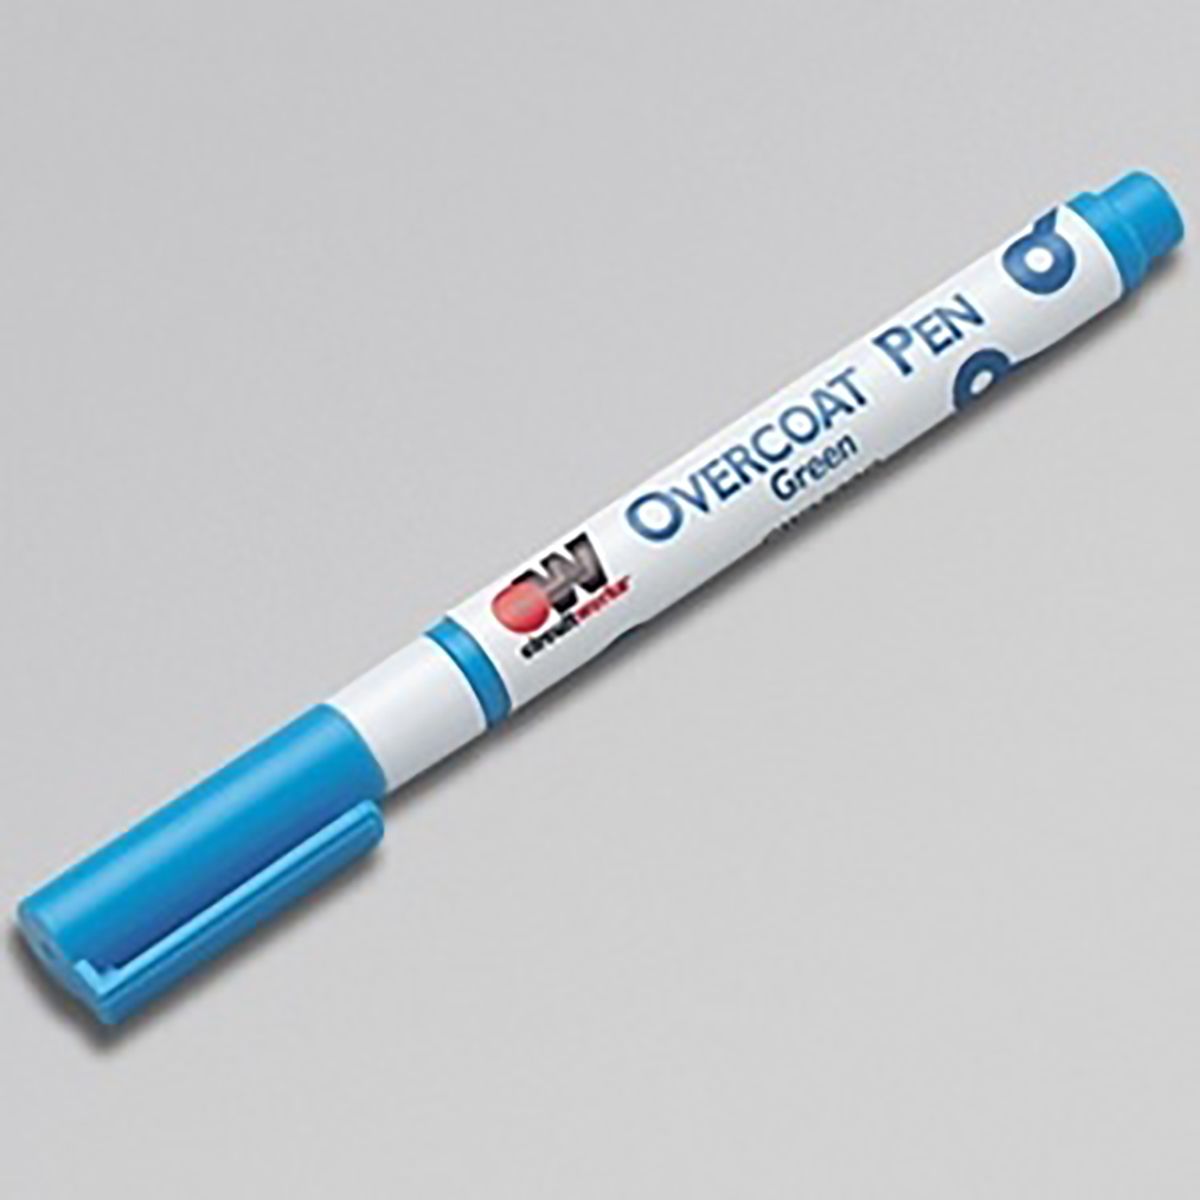 Chemtronics Black Acrylic Conformal Coating, 4.9 g Pen, -55°C min, +125°C max